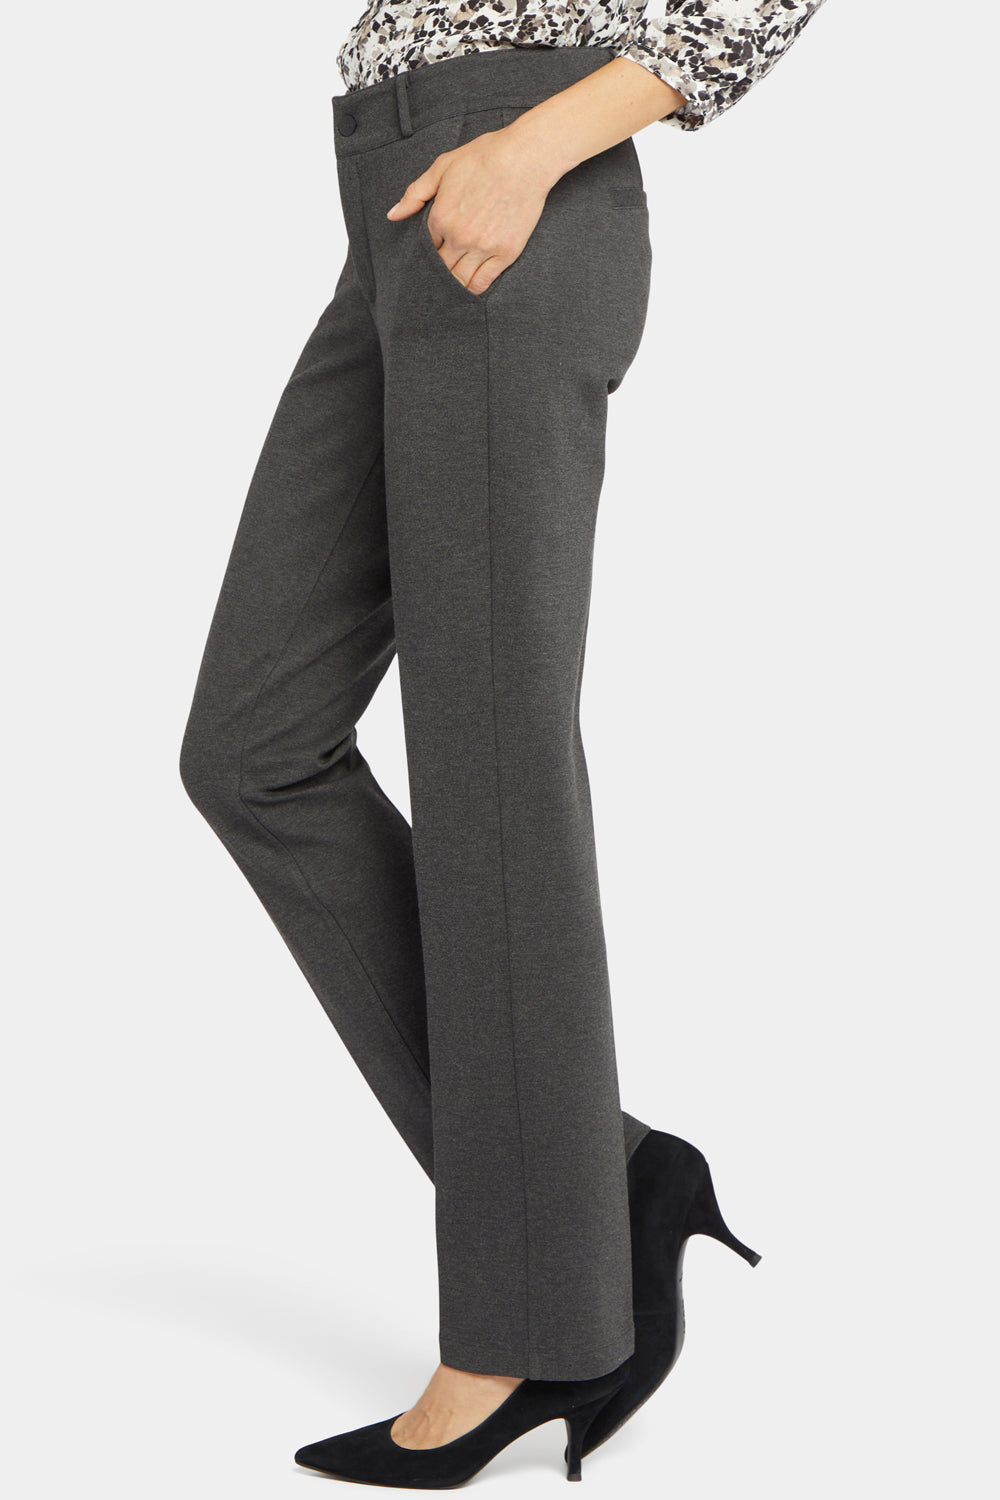 NYDJ Women's Petite Petite Size Ponte Knit Trouser Pants, Charcoal